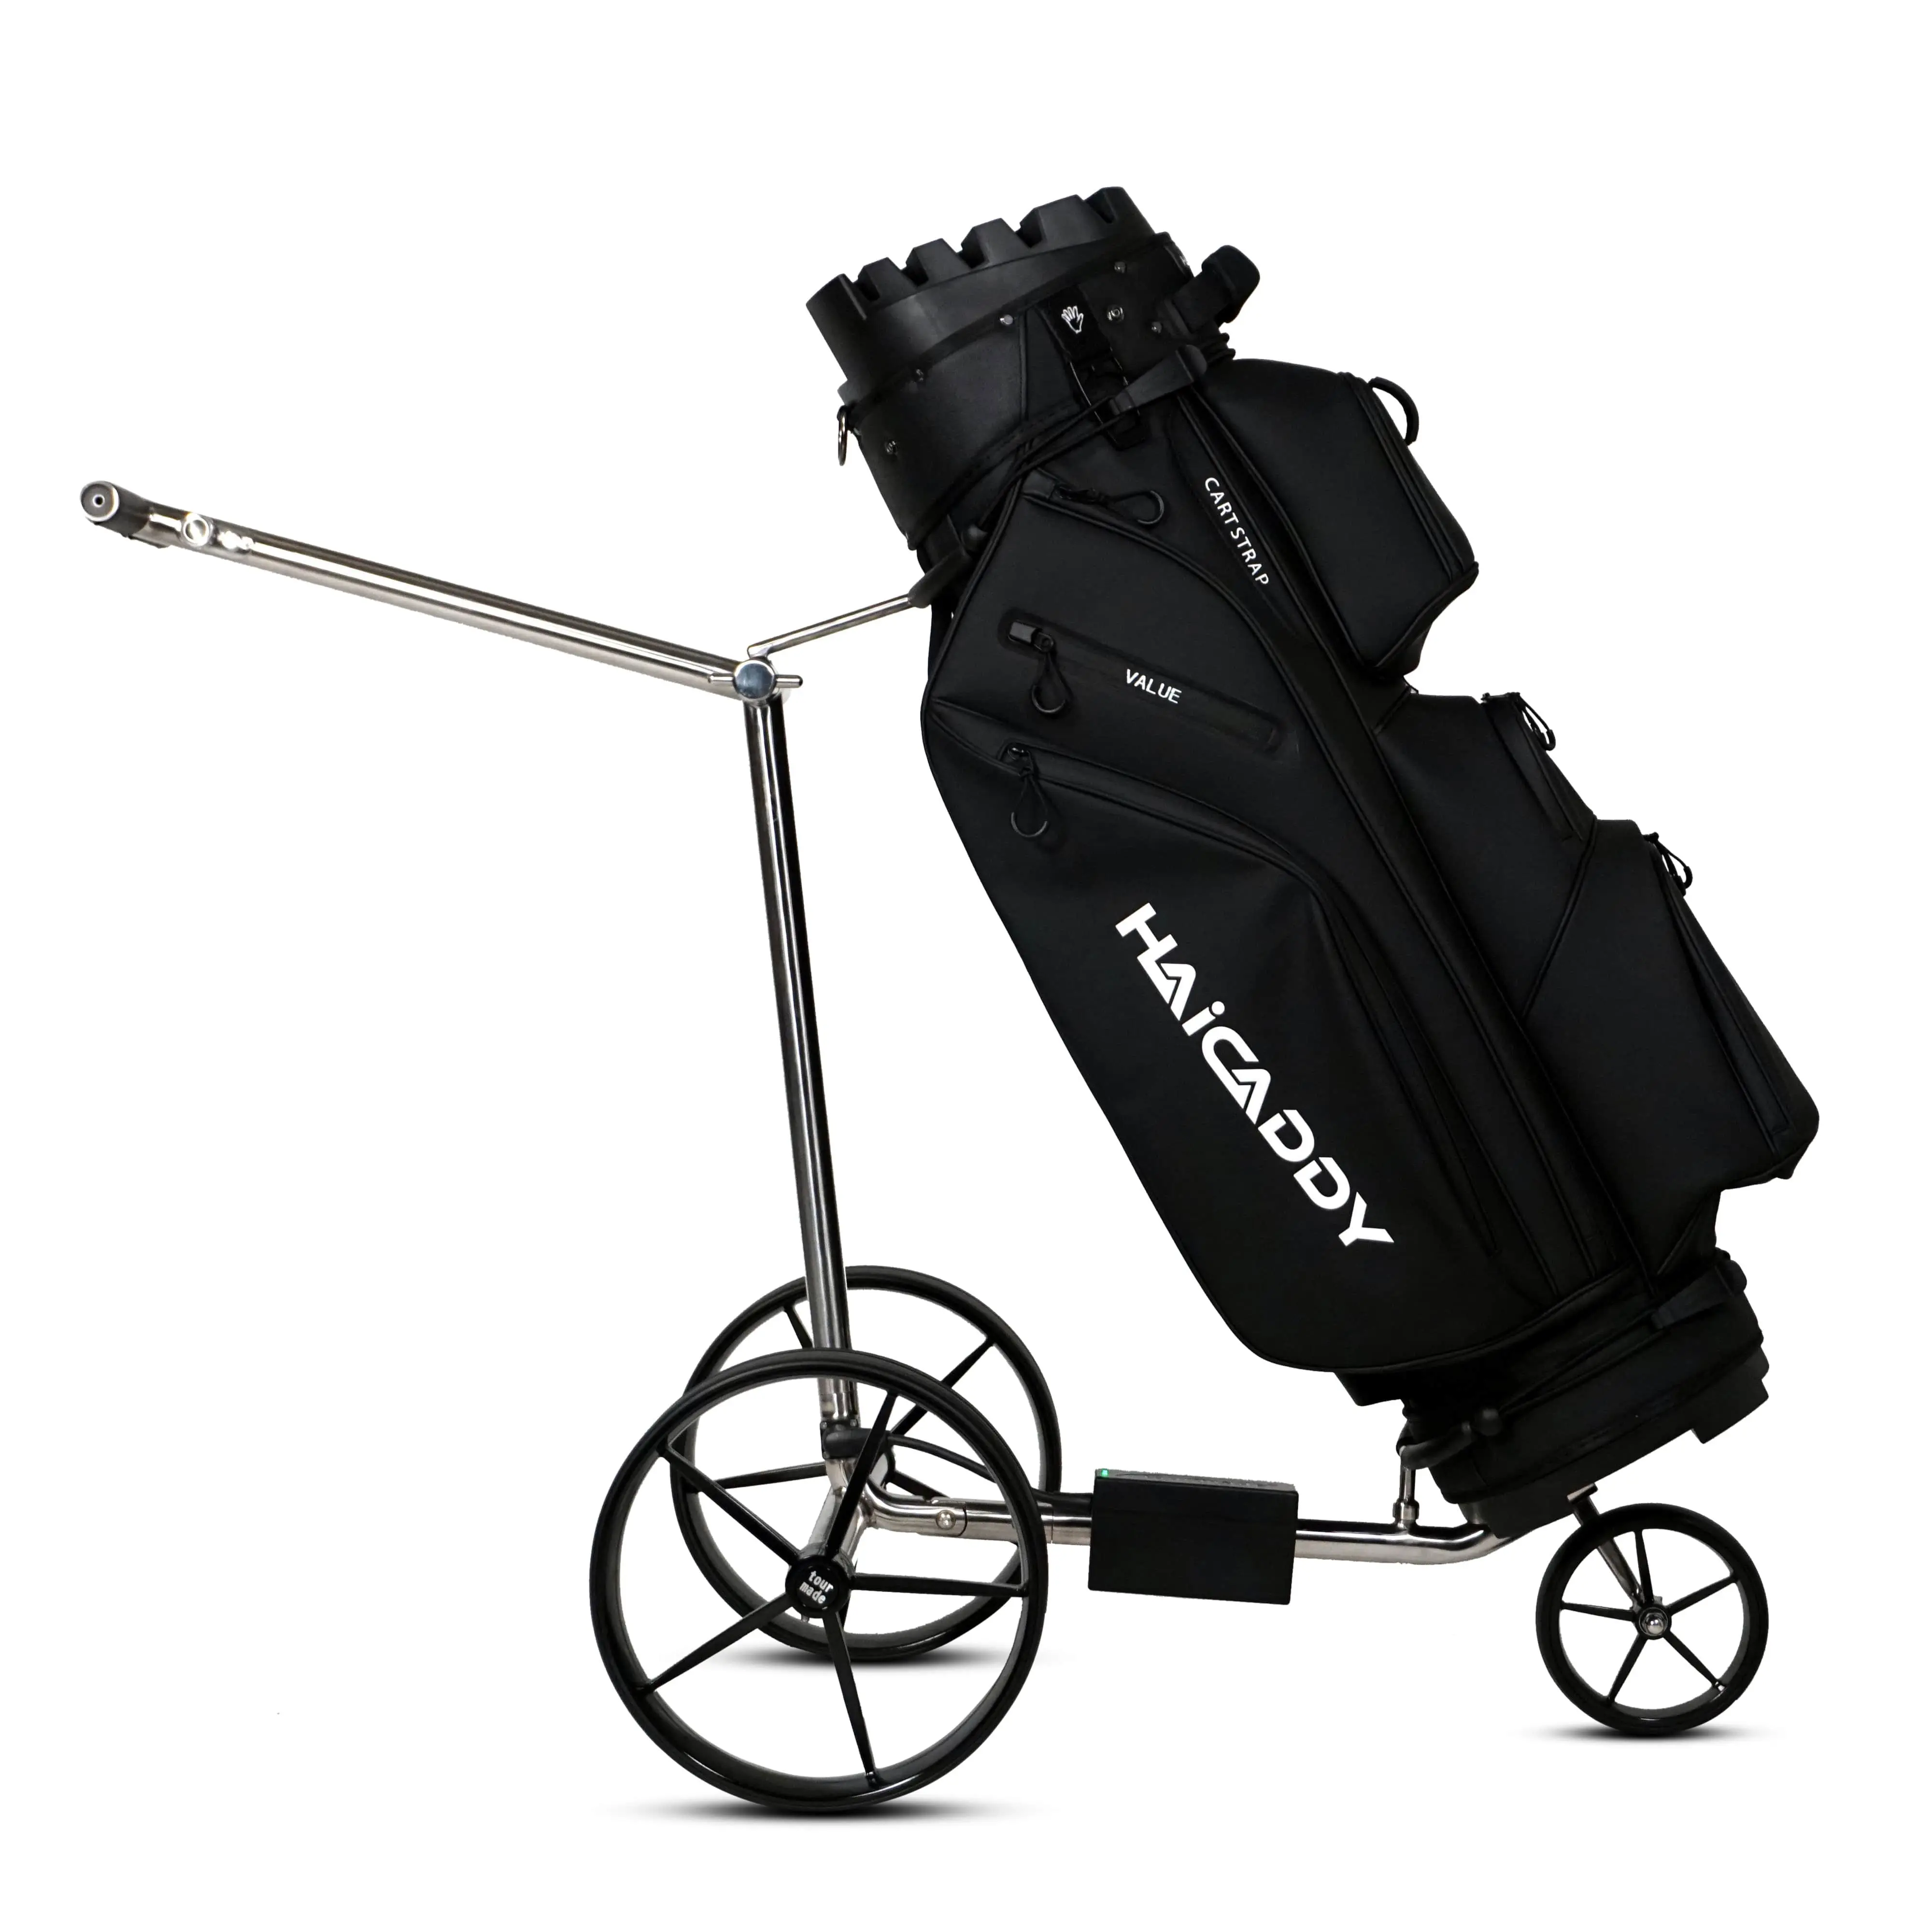 Tour Made Haicaddy® HC9 electric golf trolley